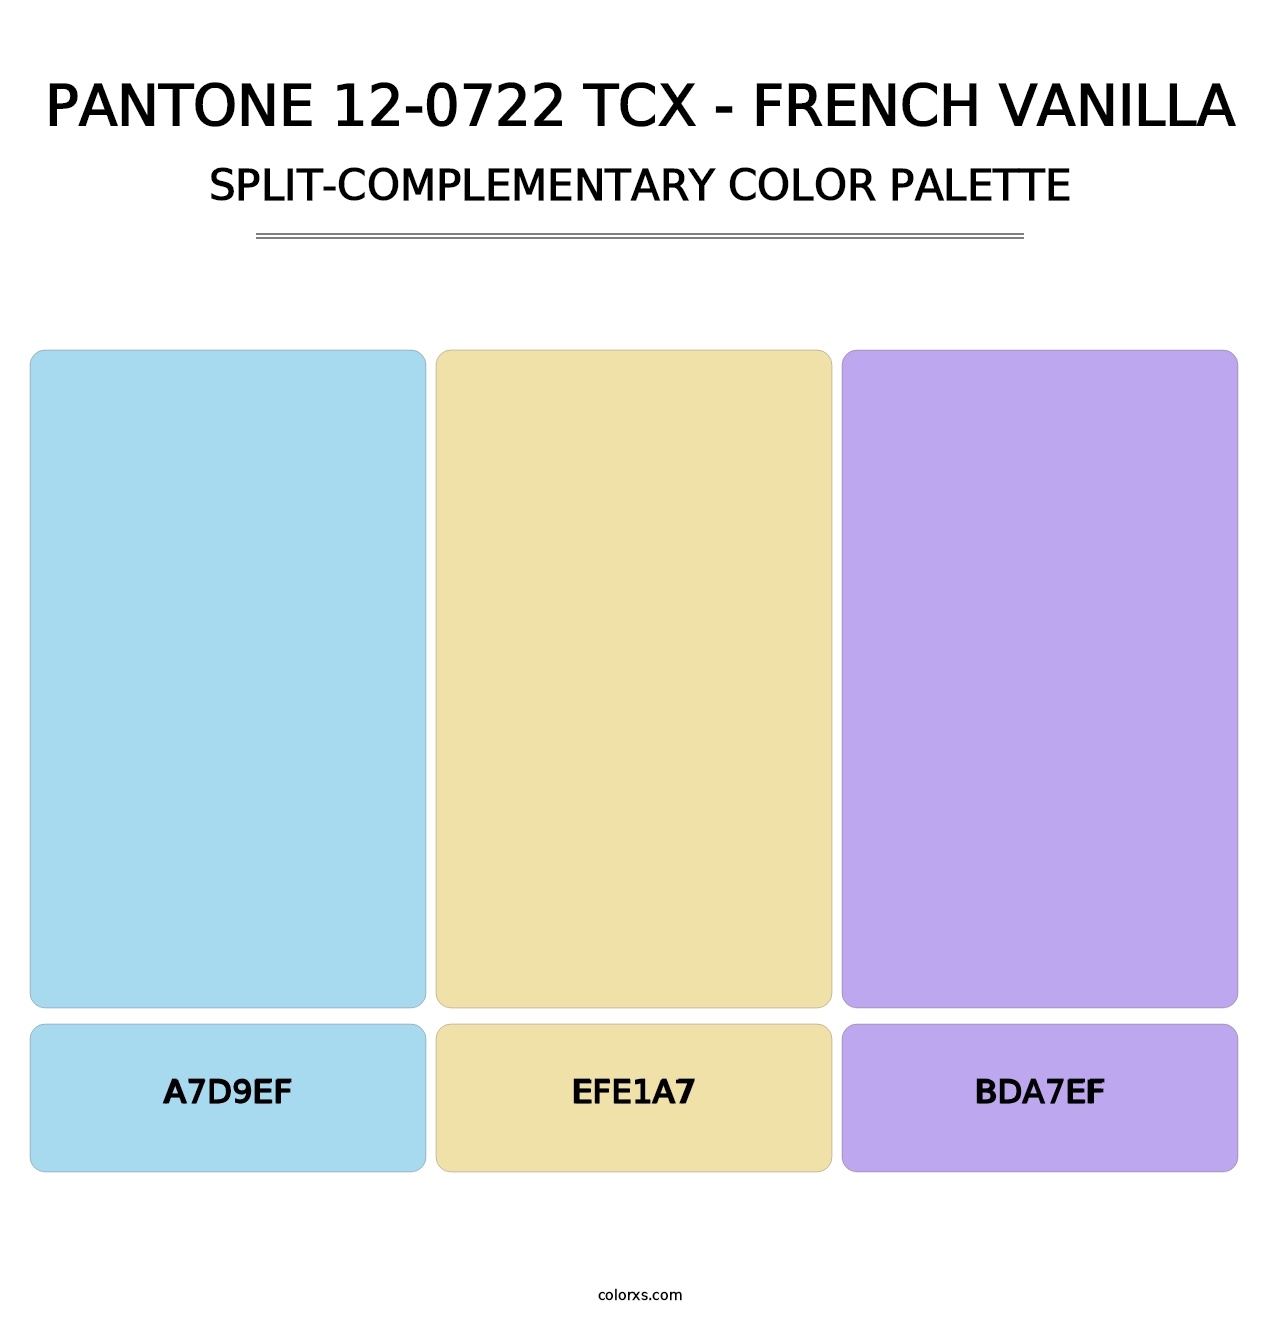 PANTONE 12-0722 TCX - French Vanilla - Split-Complementary Color Palette